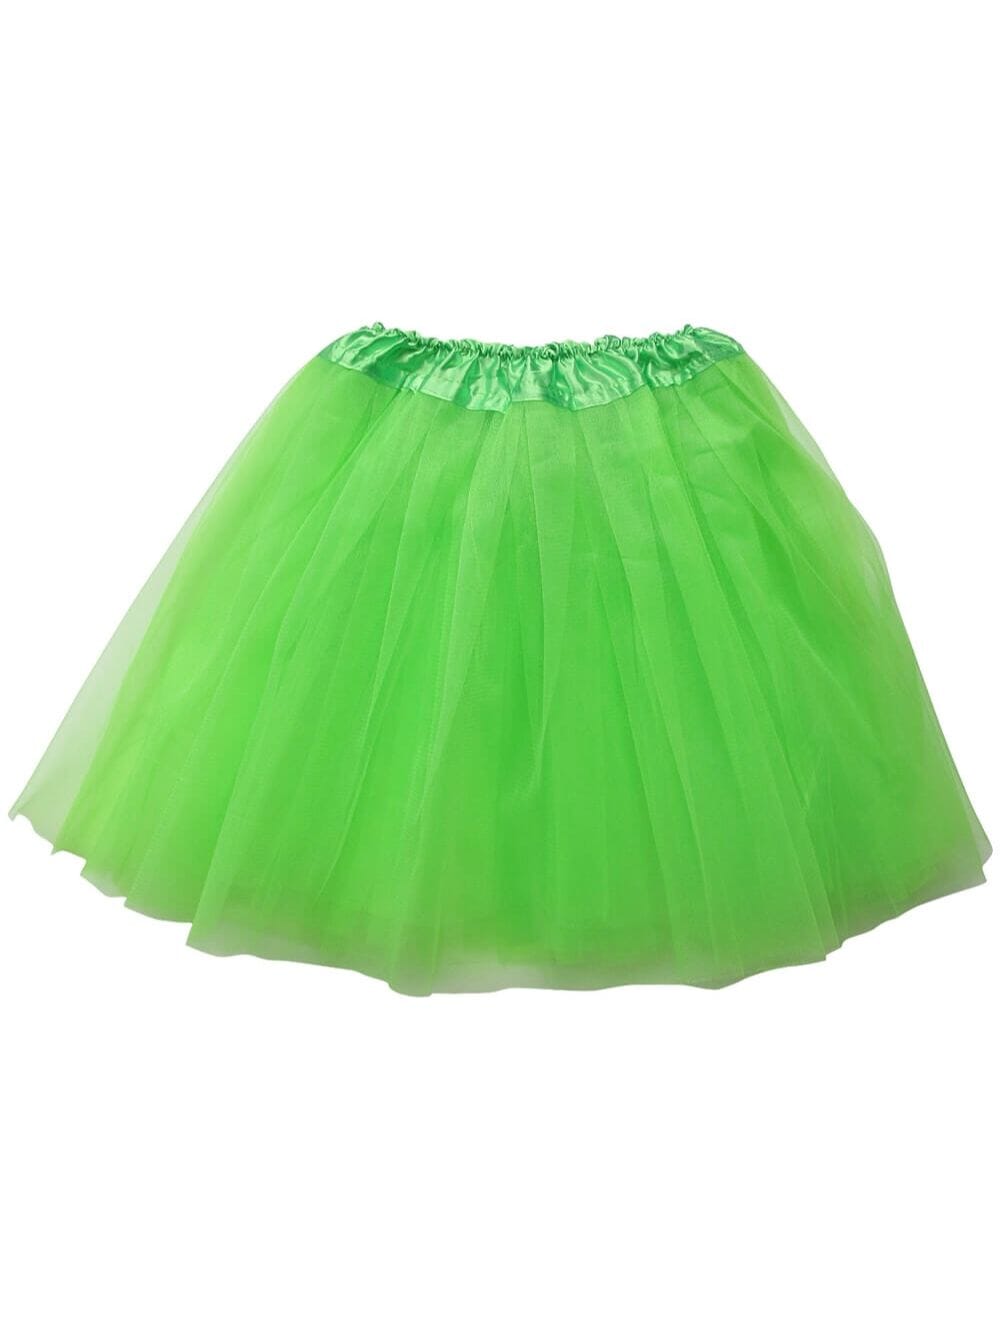 Lime Green Plus Size Adult Tutu Skirt - Women's Plus Size 3- Layer Basic Ballet Costume Dance Tutus - Sydney So Sweet